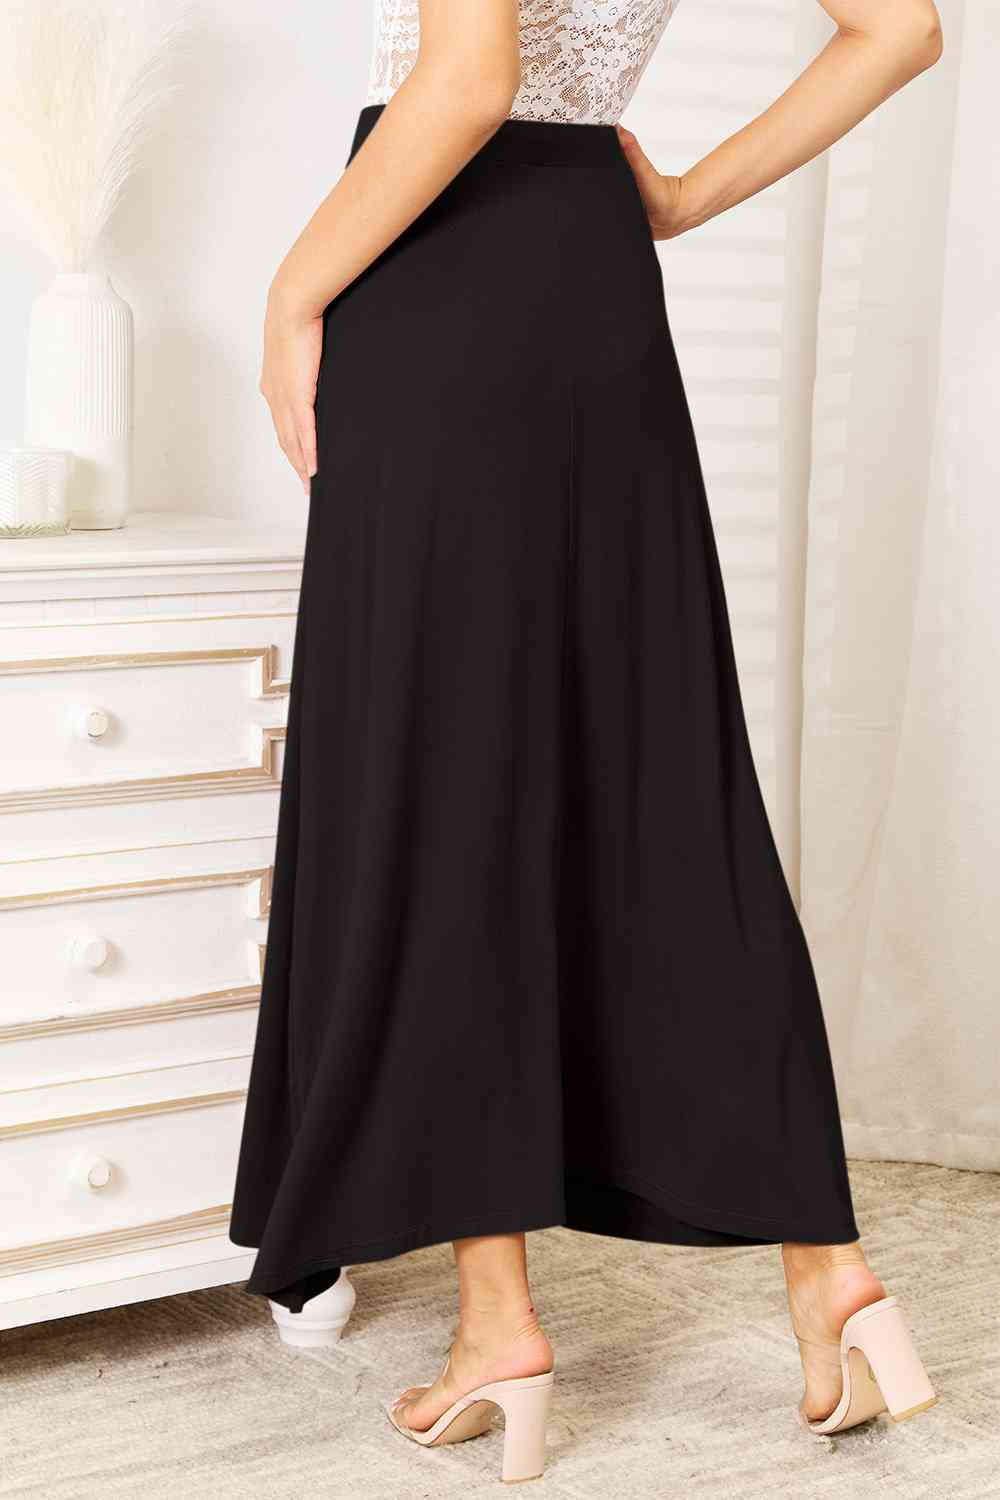 Falda larga suave de tamaño completo